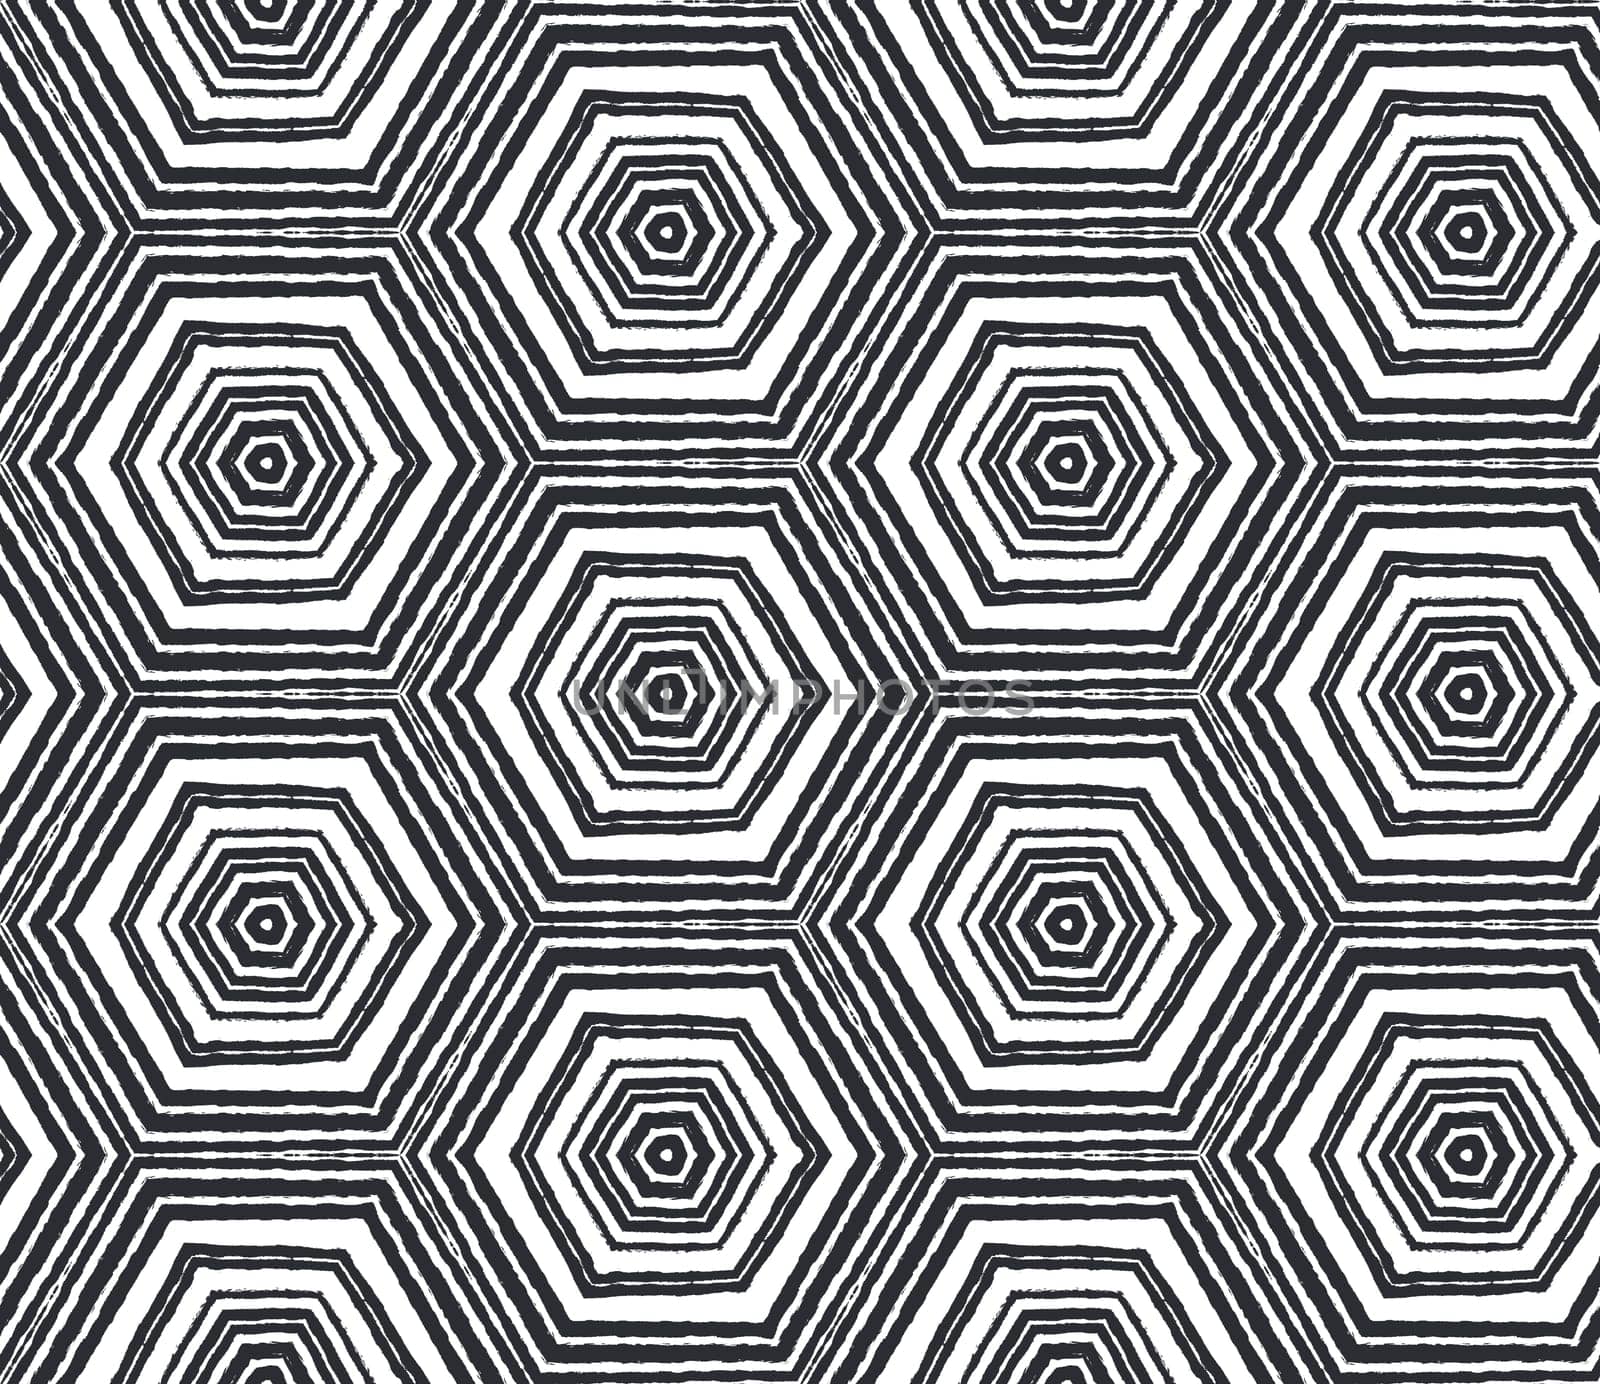 Tiled watercolor pattern. Black symmetrical by beginagain